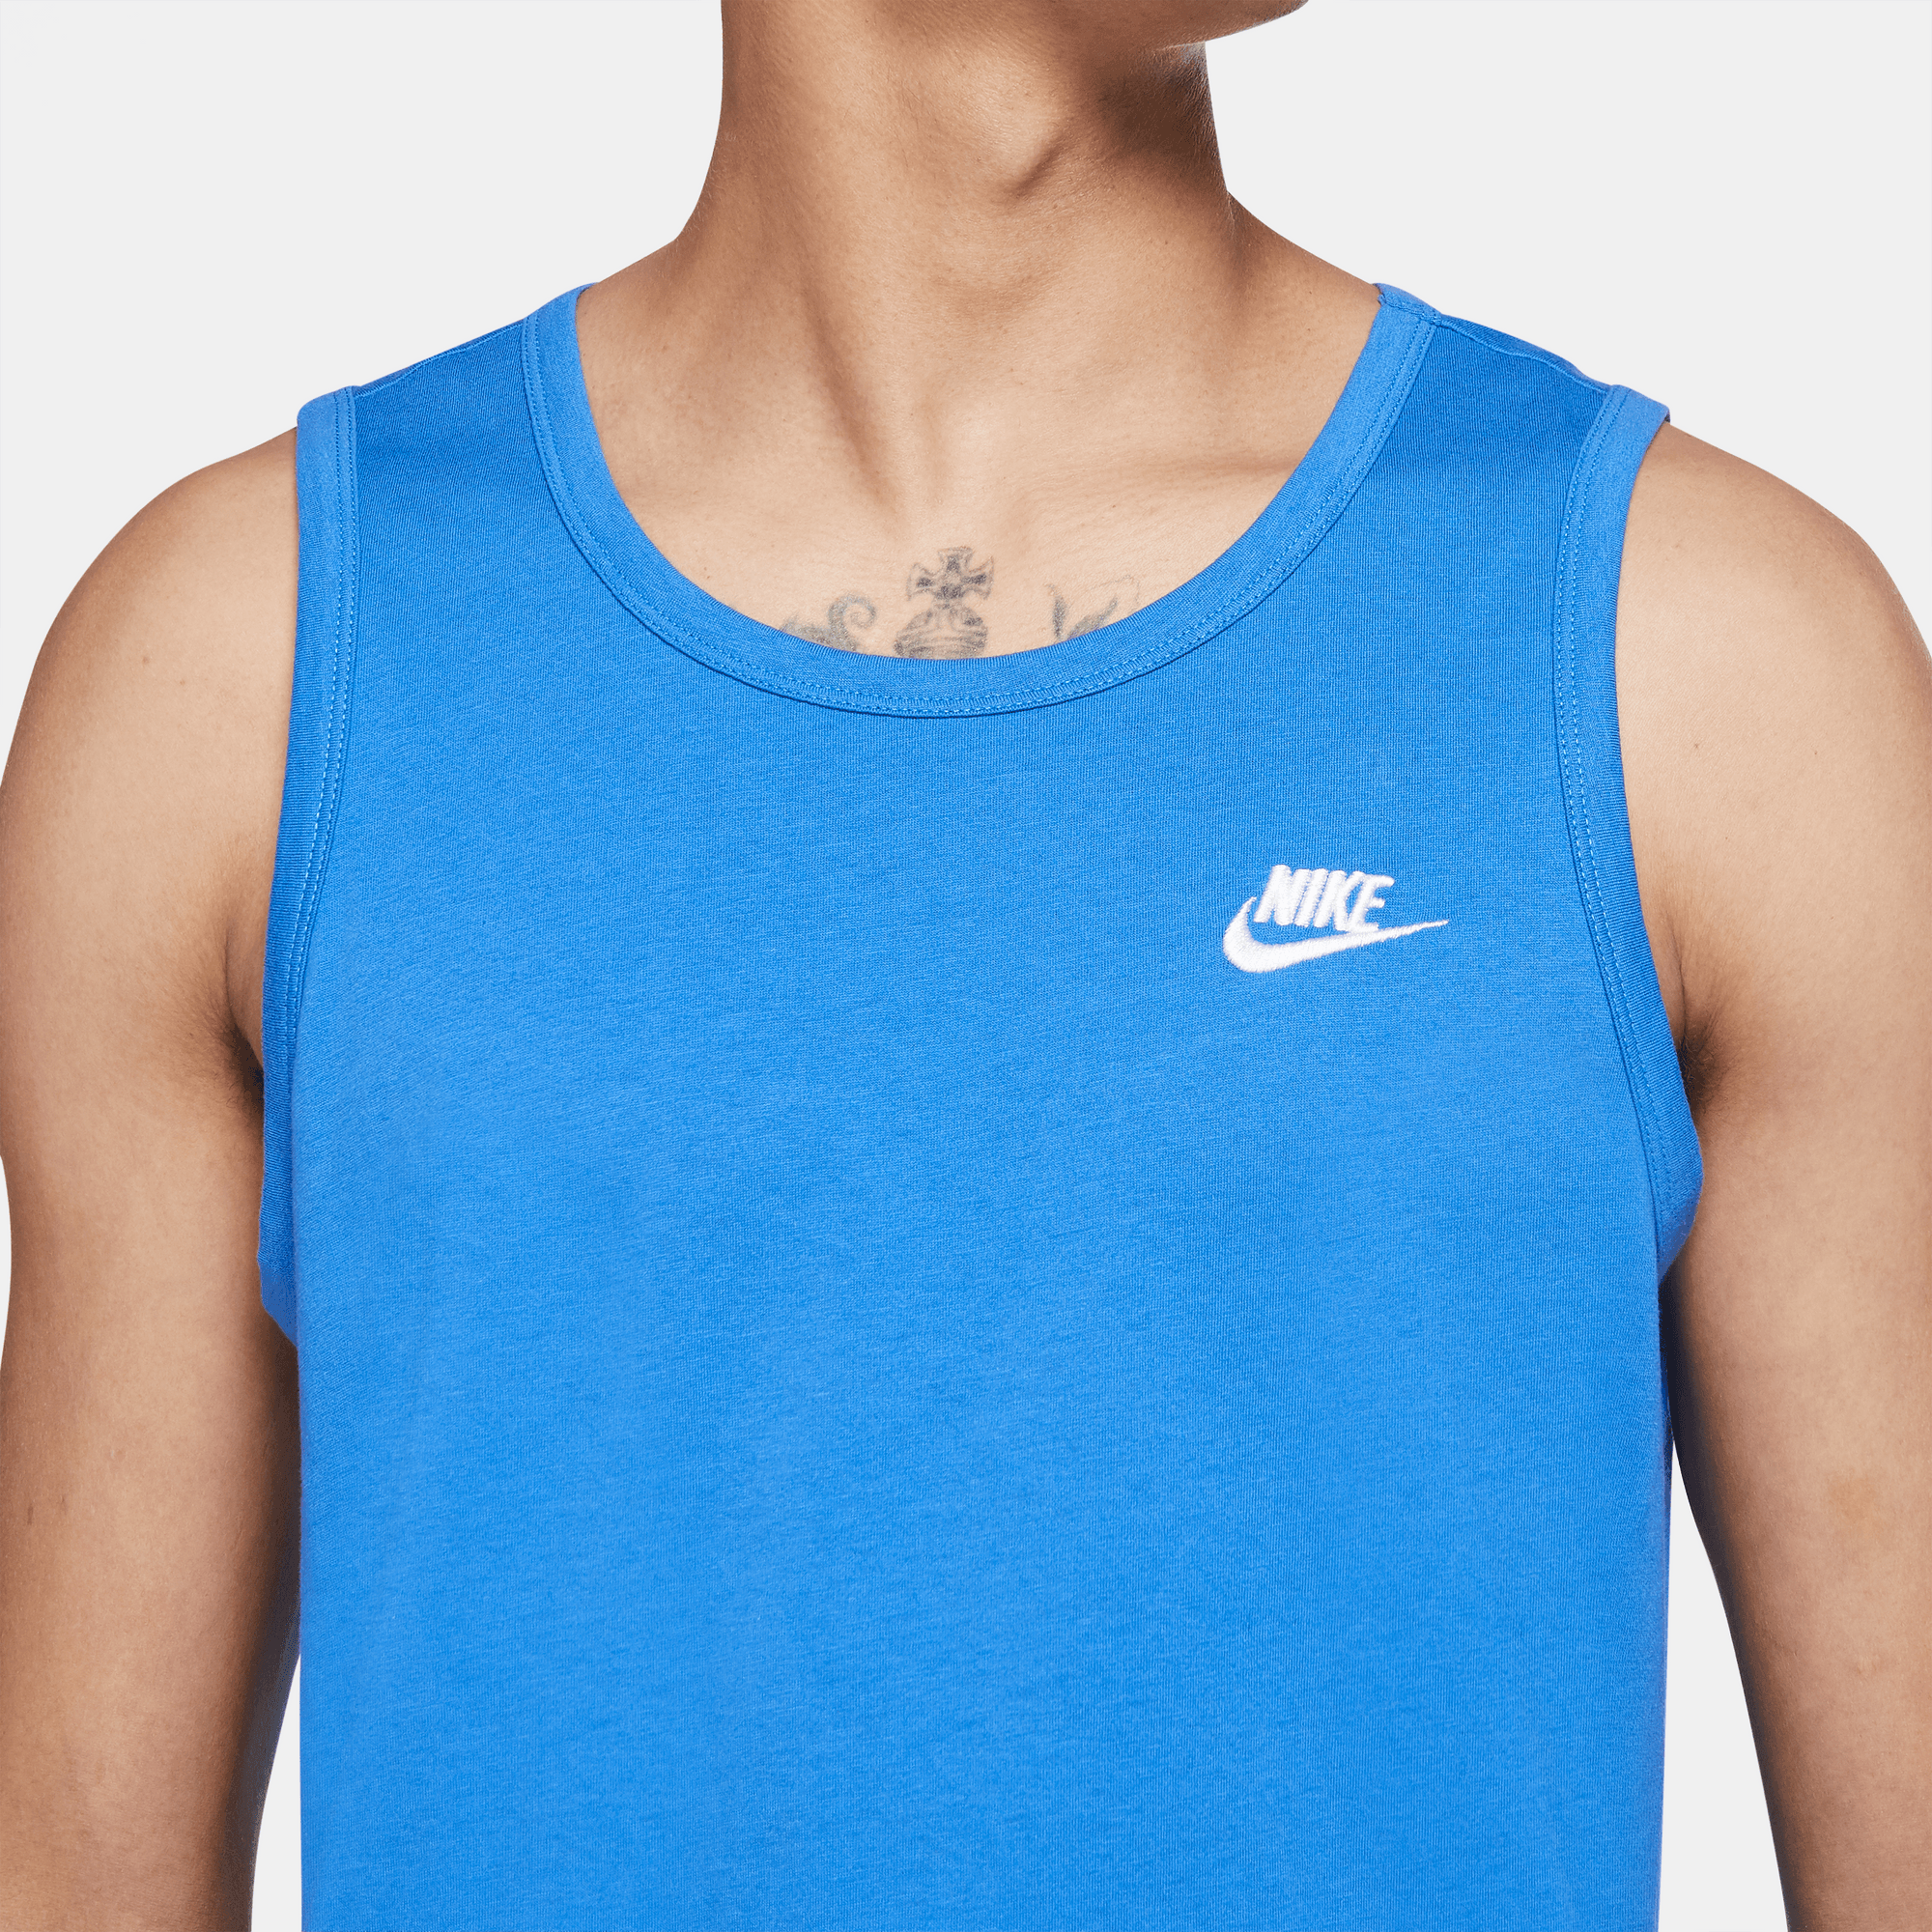 Solera Nike Color Azul